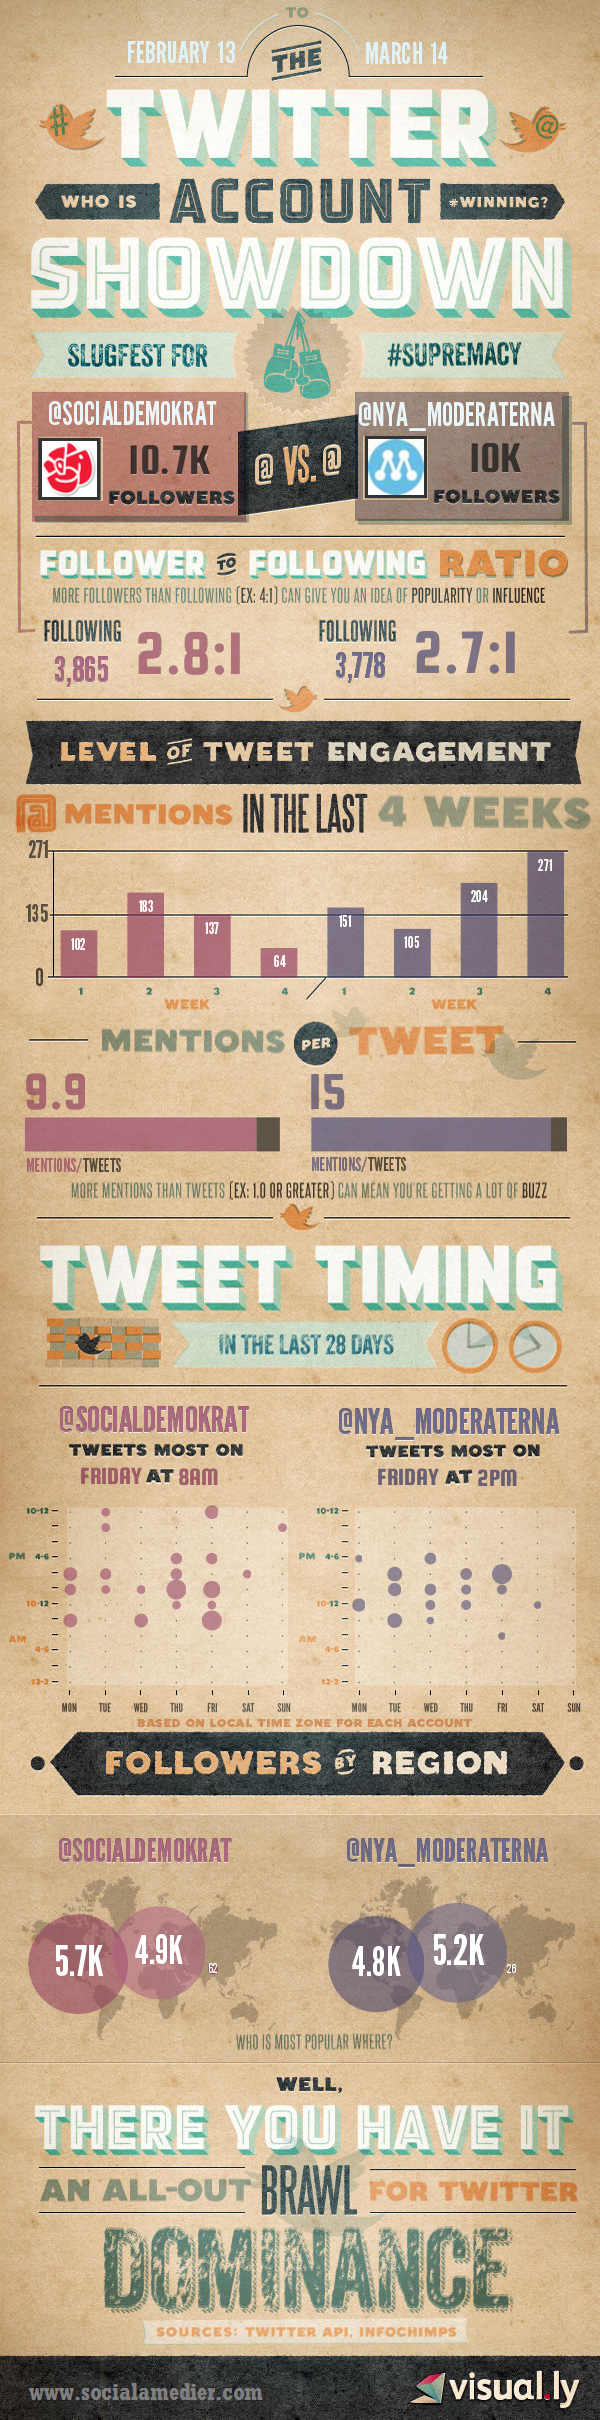 infographic twitter moderaterna socialdemokraterna